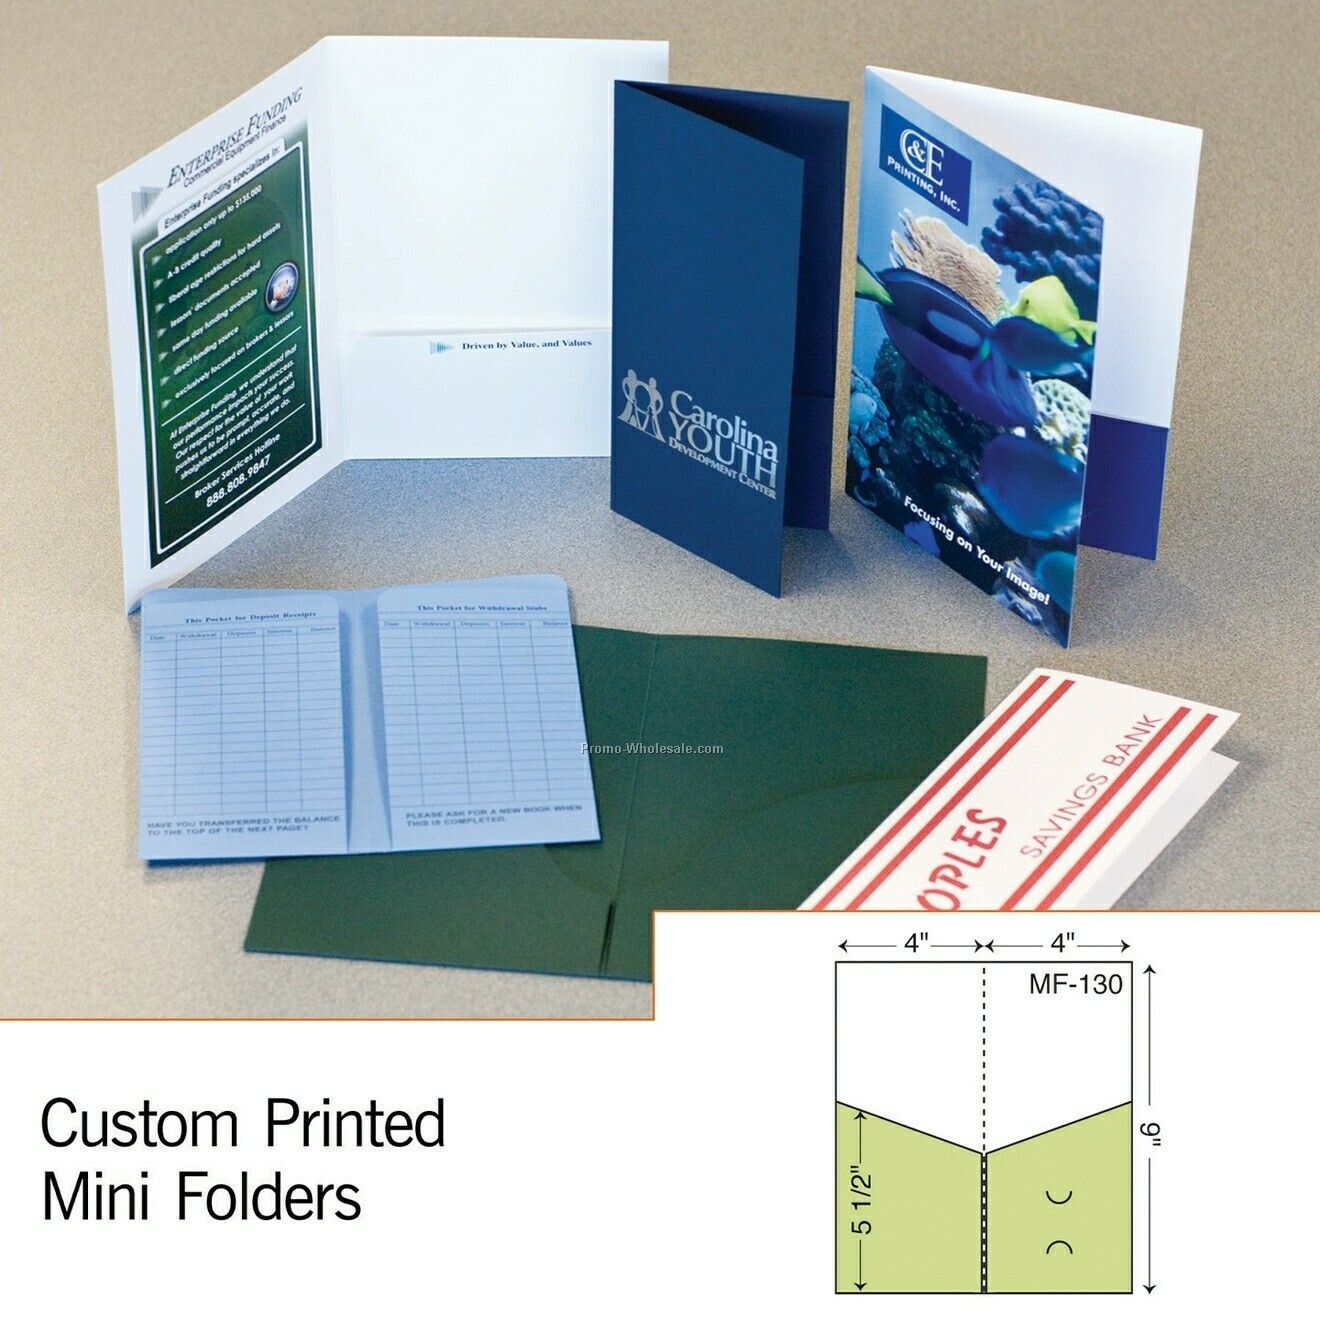 4"x9" Mini Folder W/ Double Pocket (Foil Stamp/Emboss)